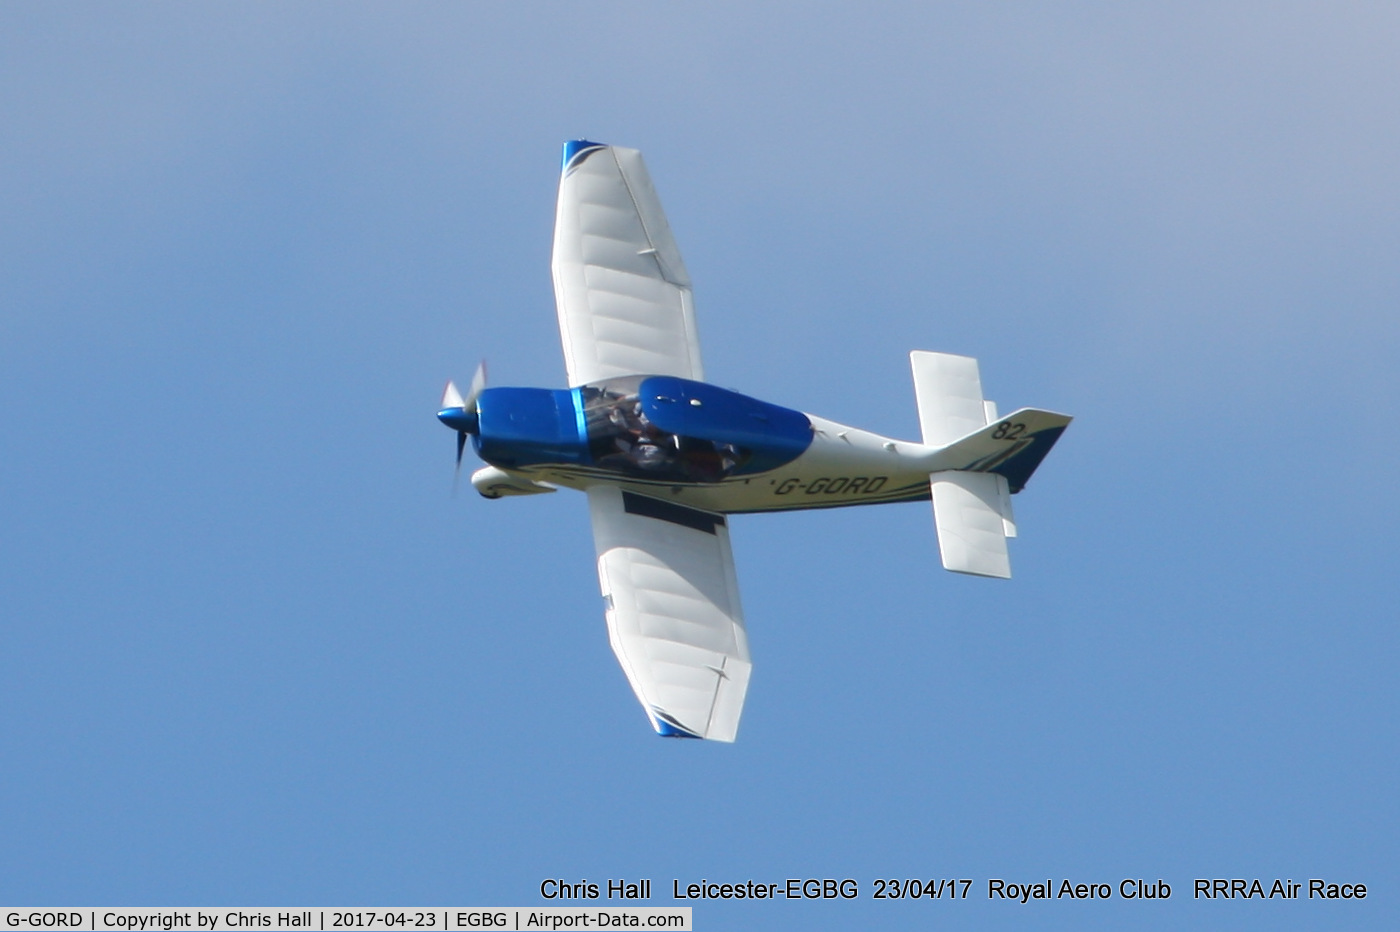 G-GORD, 2014 Robin DR-400-140B Major Major C/N 2669, Royal Aero Club 3R's air race at Leicester